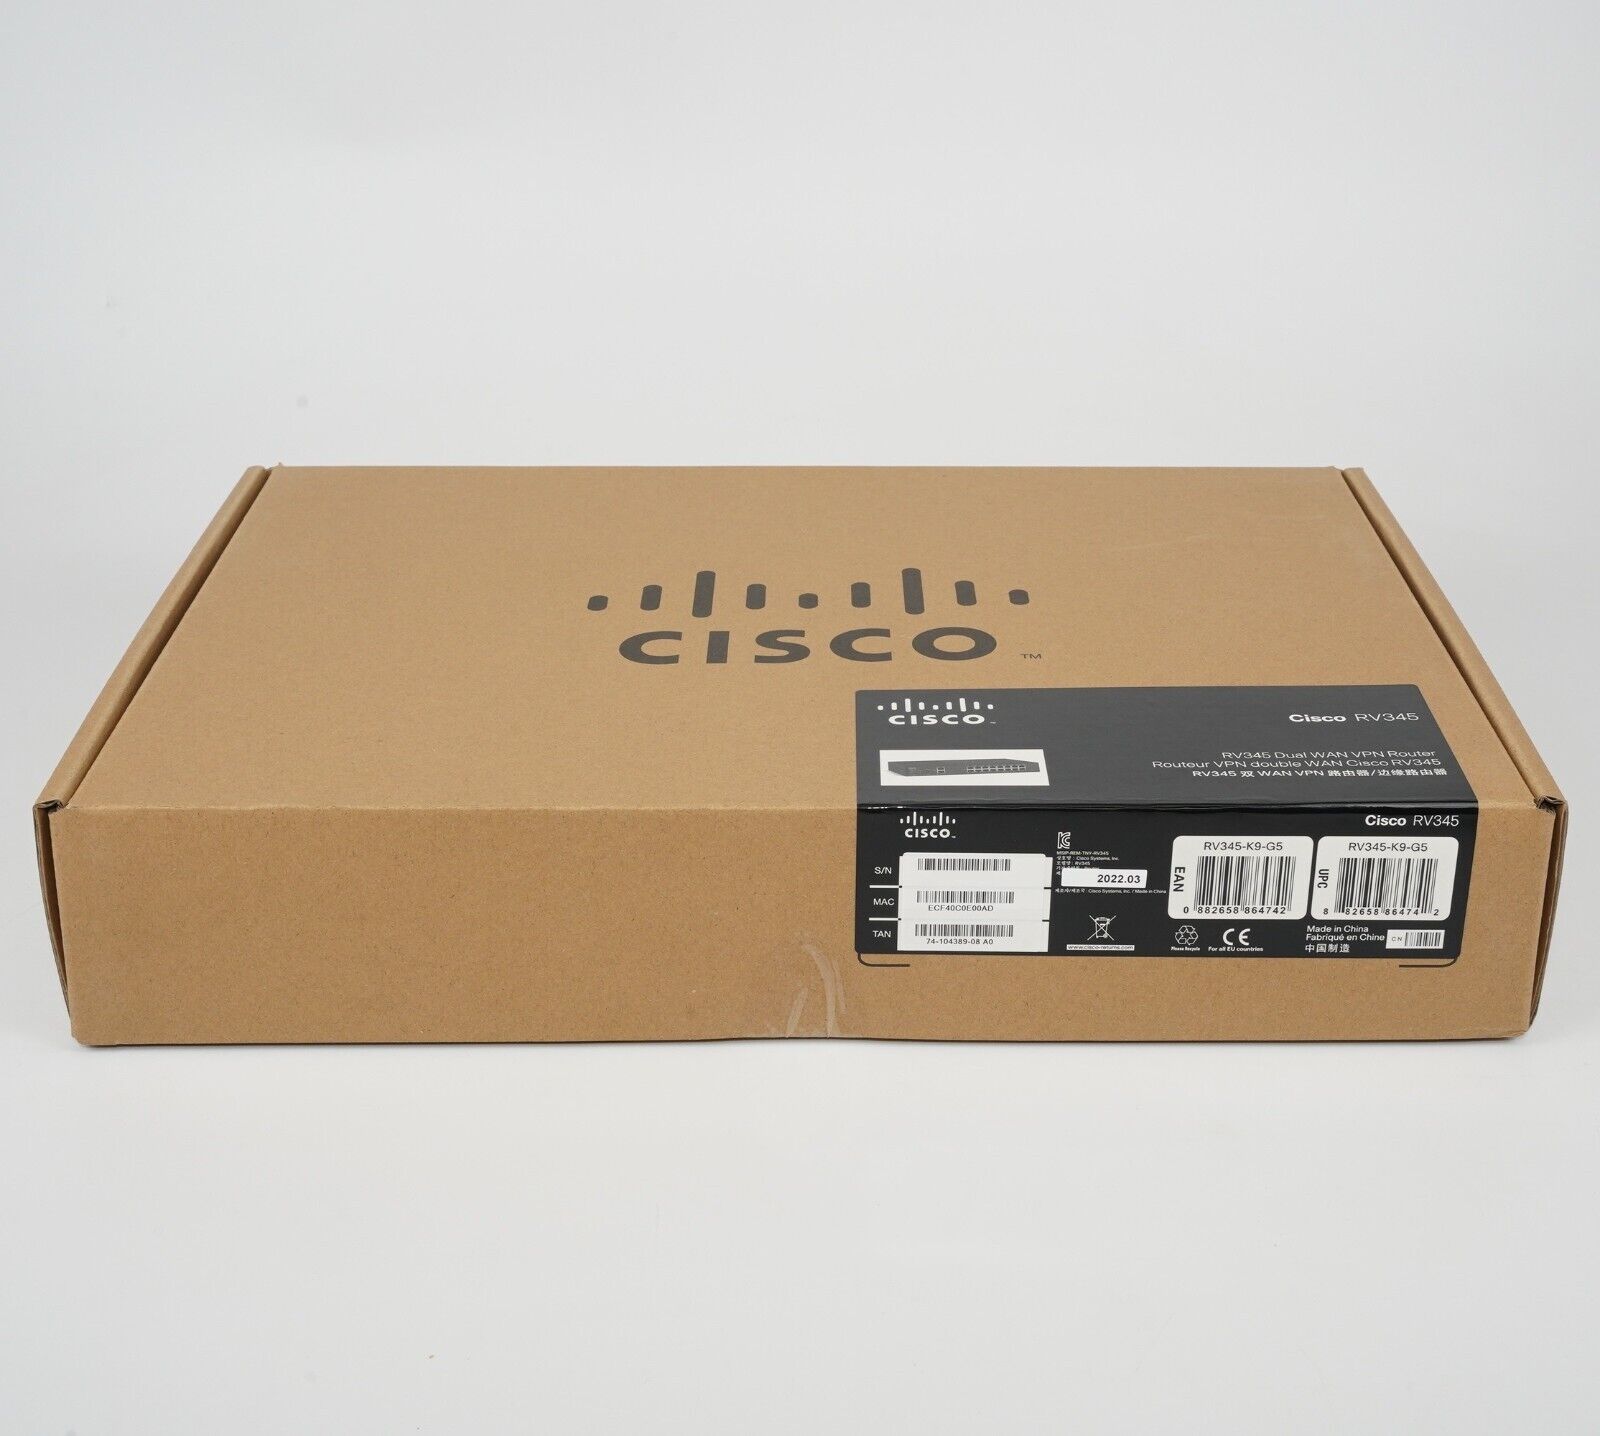 Cisco | RV345-K9 |  Gigabit Ethernet Router | New | More LAN Ports than RV340-K9